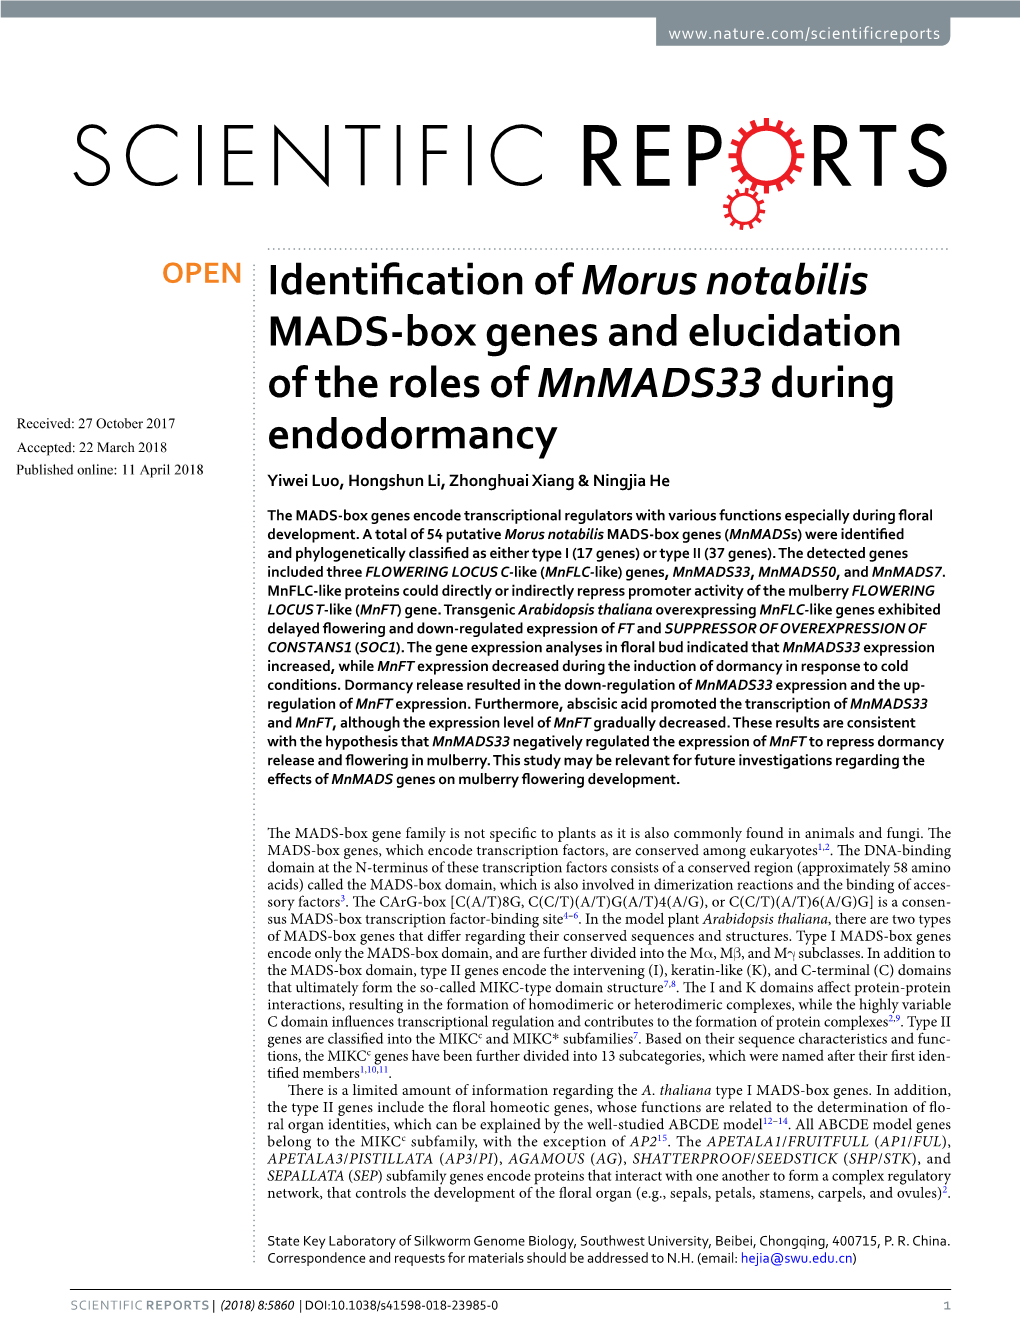 Identification of Morus Notabilis MADS-Box Genes and Elucidation